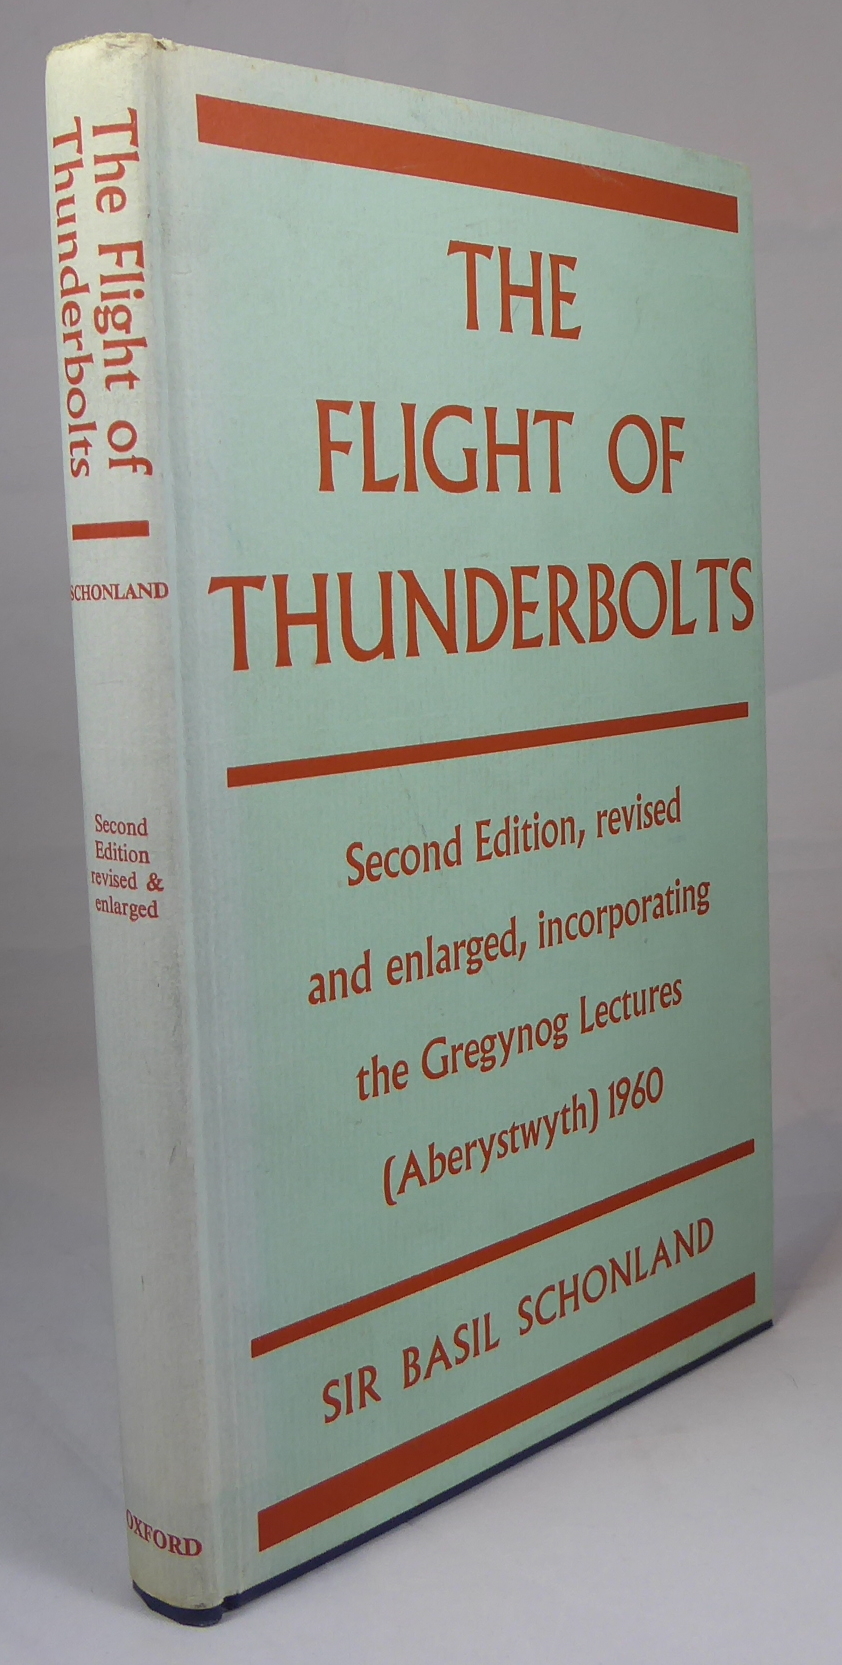 SCHONLAND, SIR BASIL - The Flight of Thunderbolts